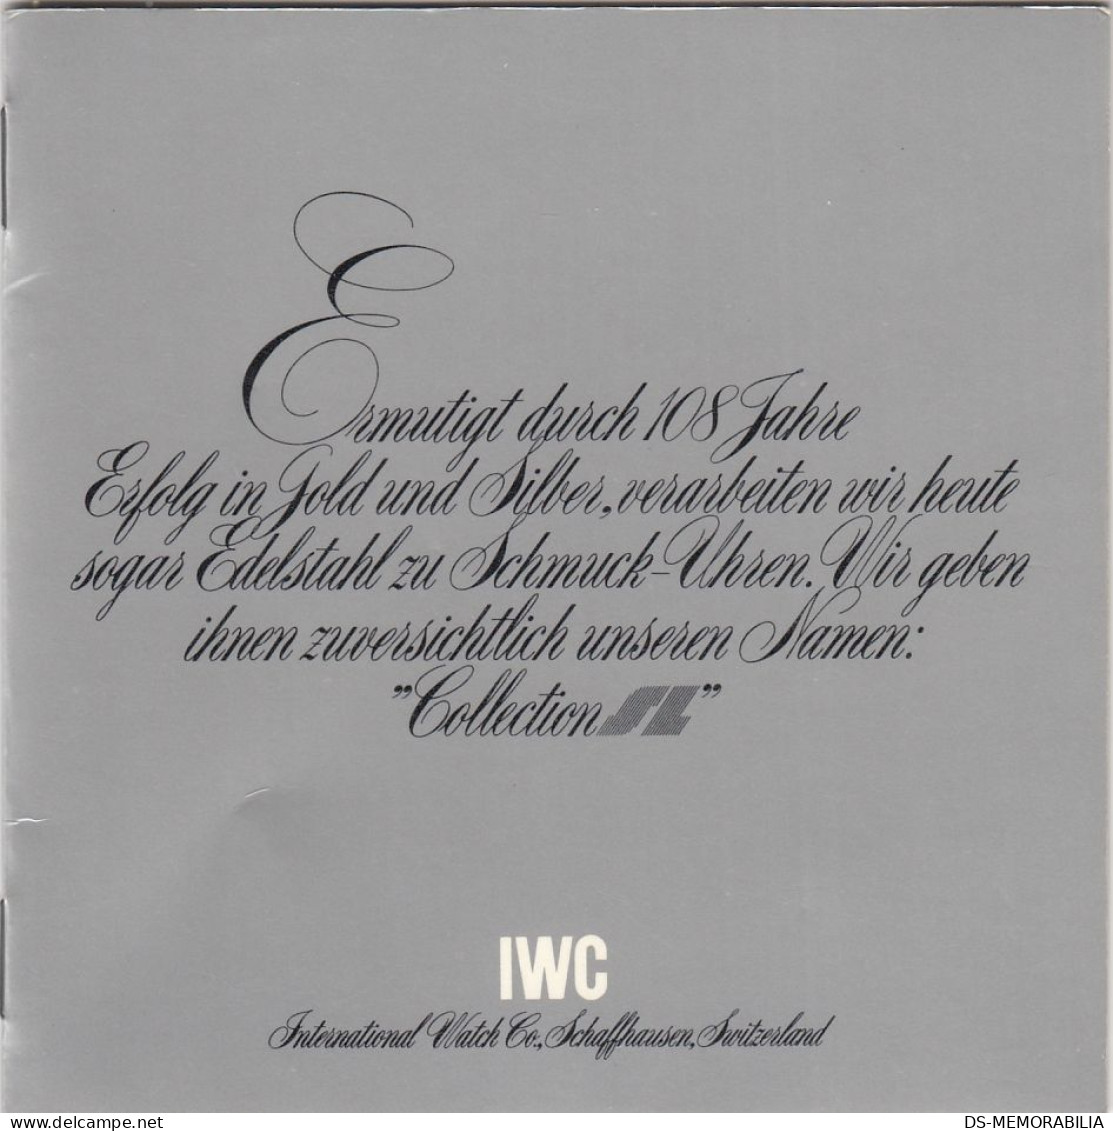 Vintage 1976 IWC Schaffhausen Catalogue & Price List Collection SL - Orologi Di Lusso